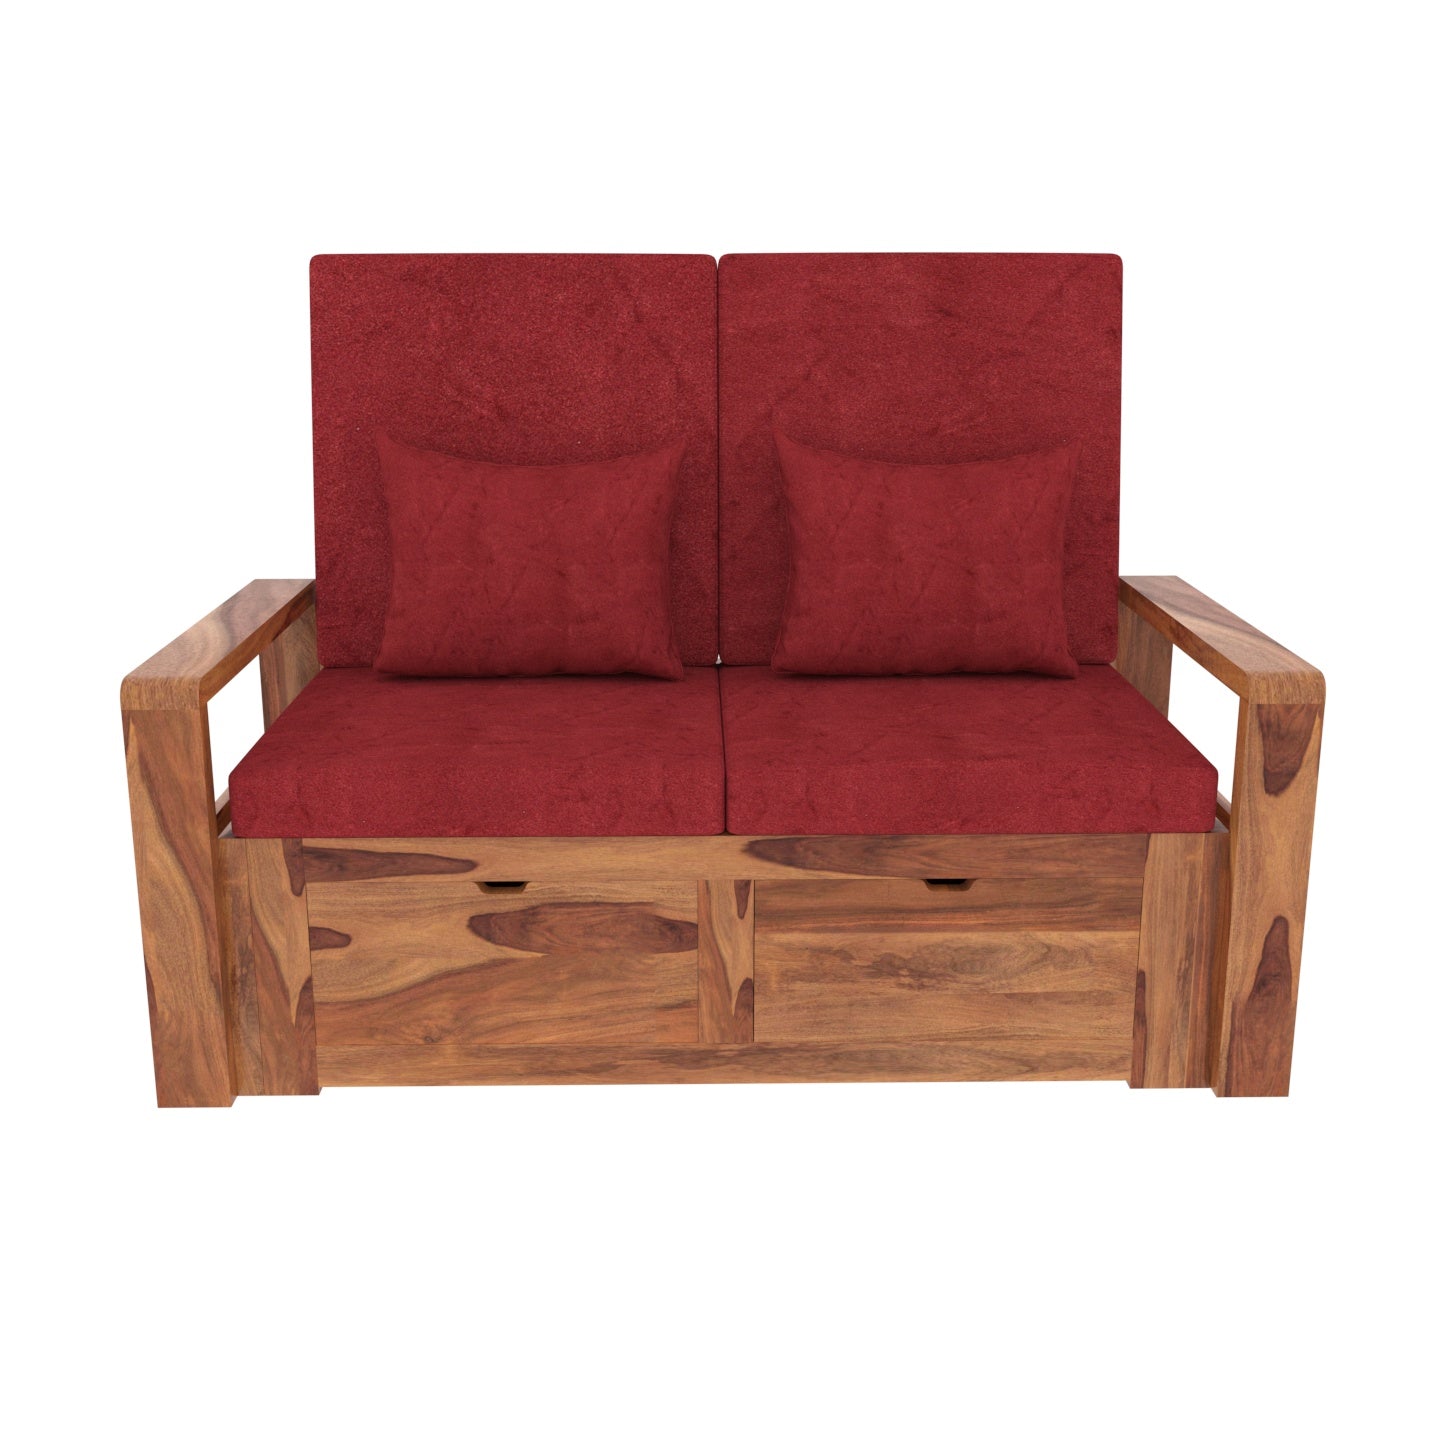 Retro Reddish Vintage Sheesham Wooden 2 Seater Sofa with Storage Sofa